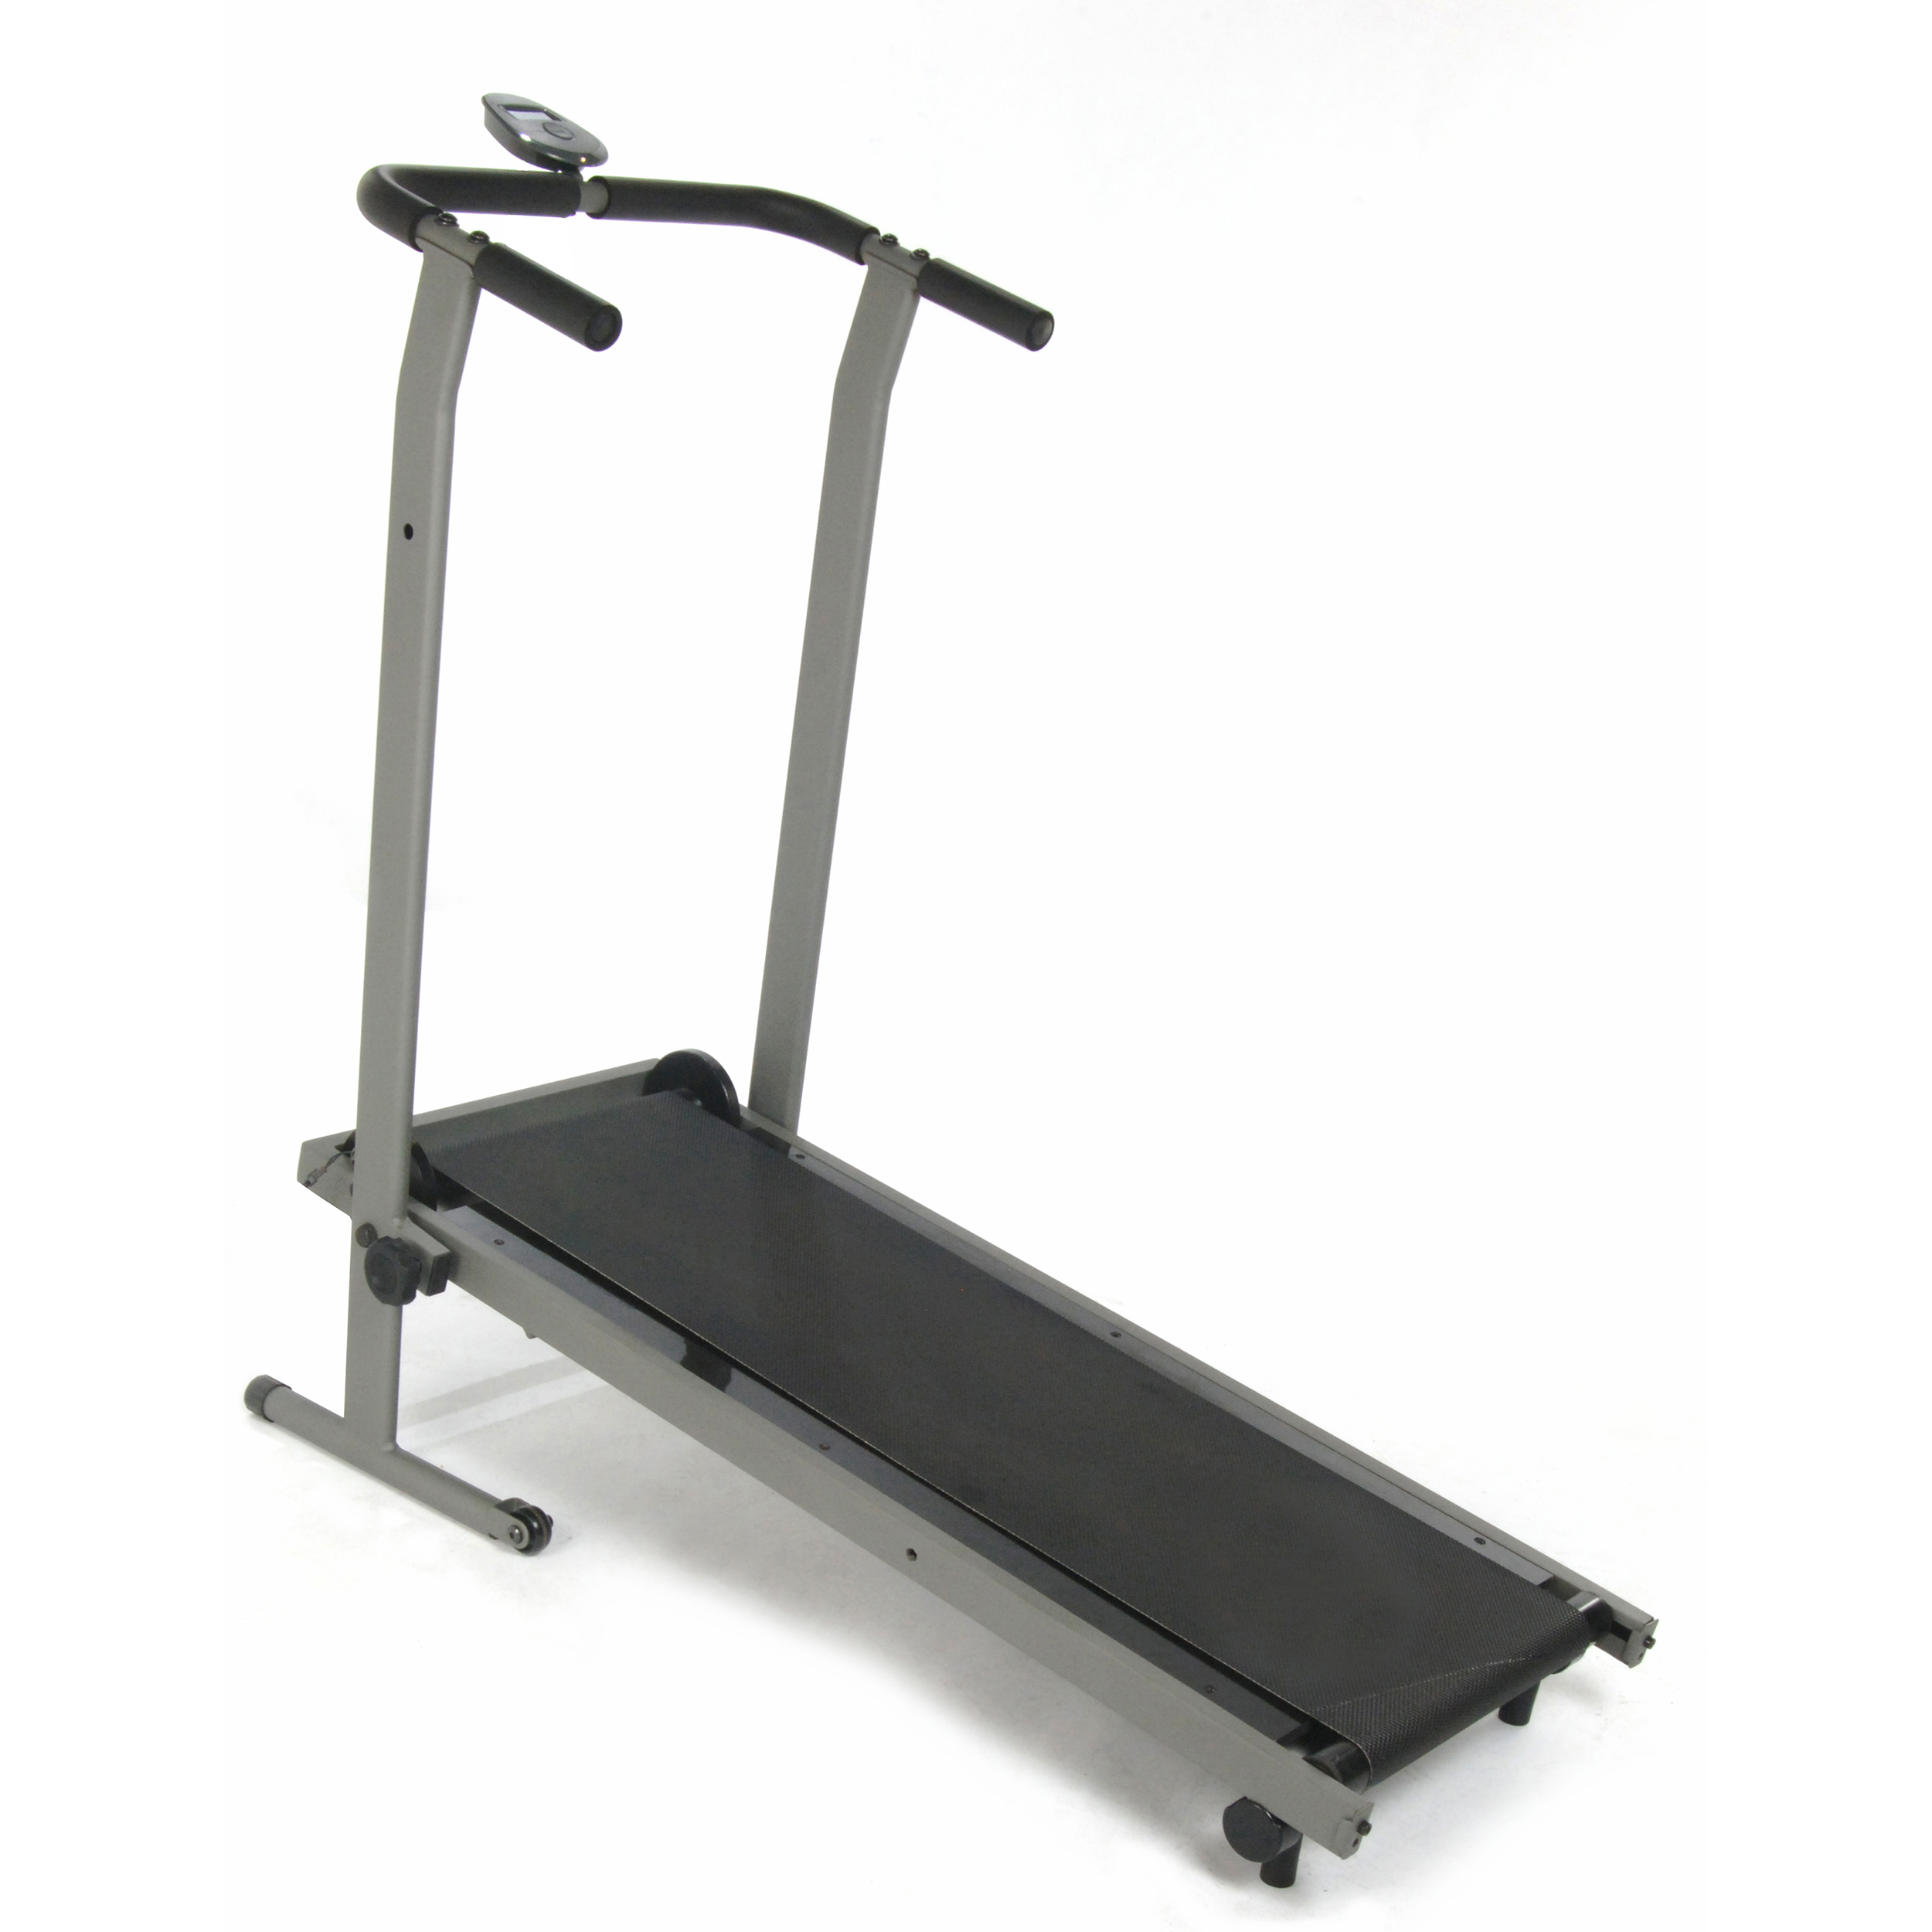 Stamina Inmotion Manual Treadmill